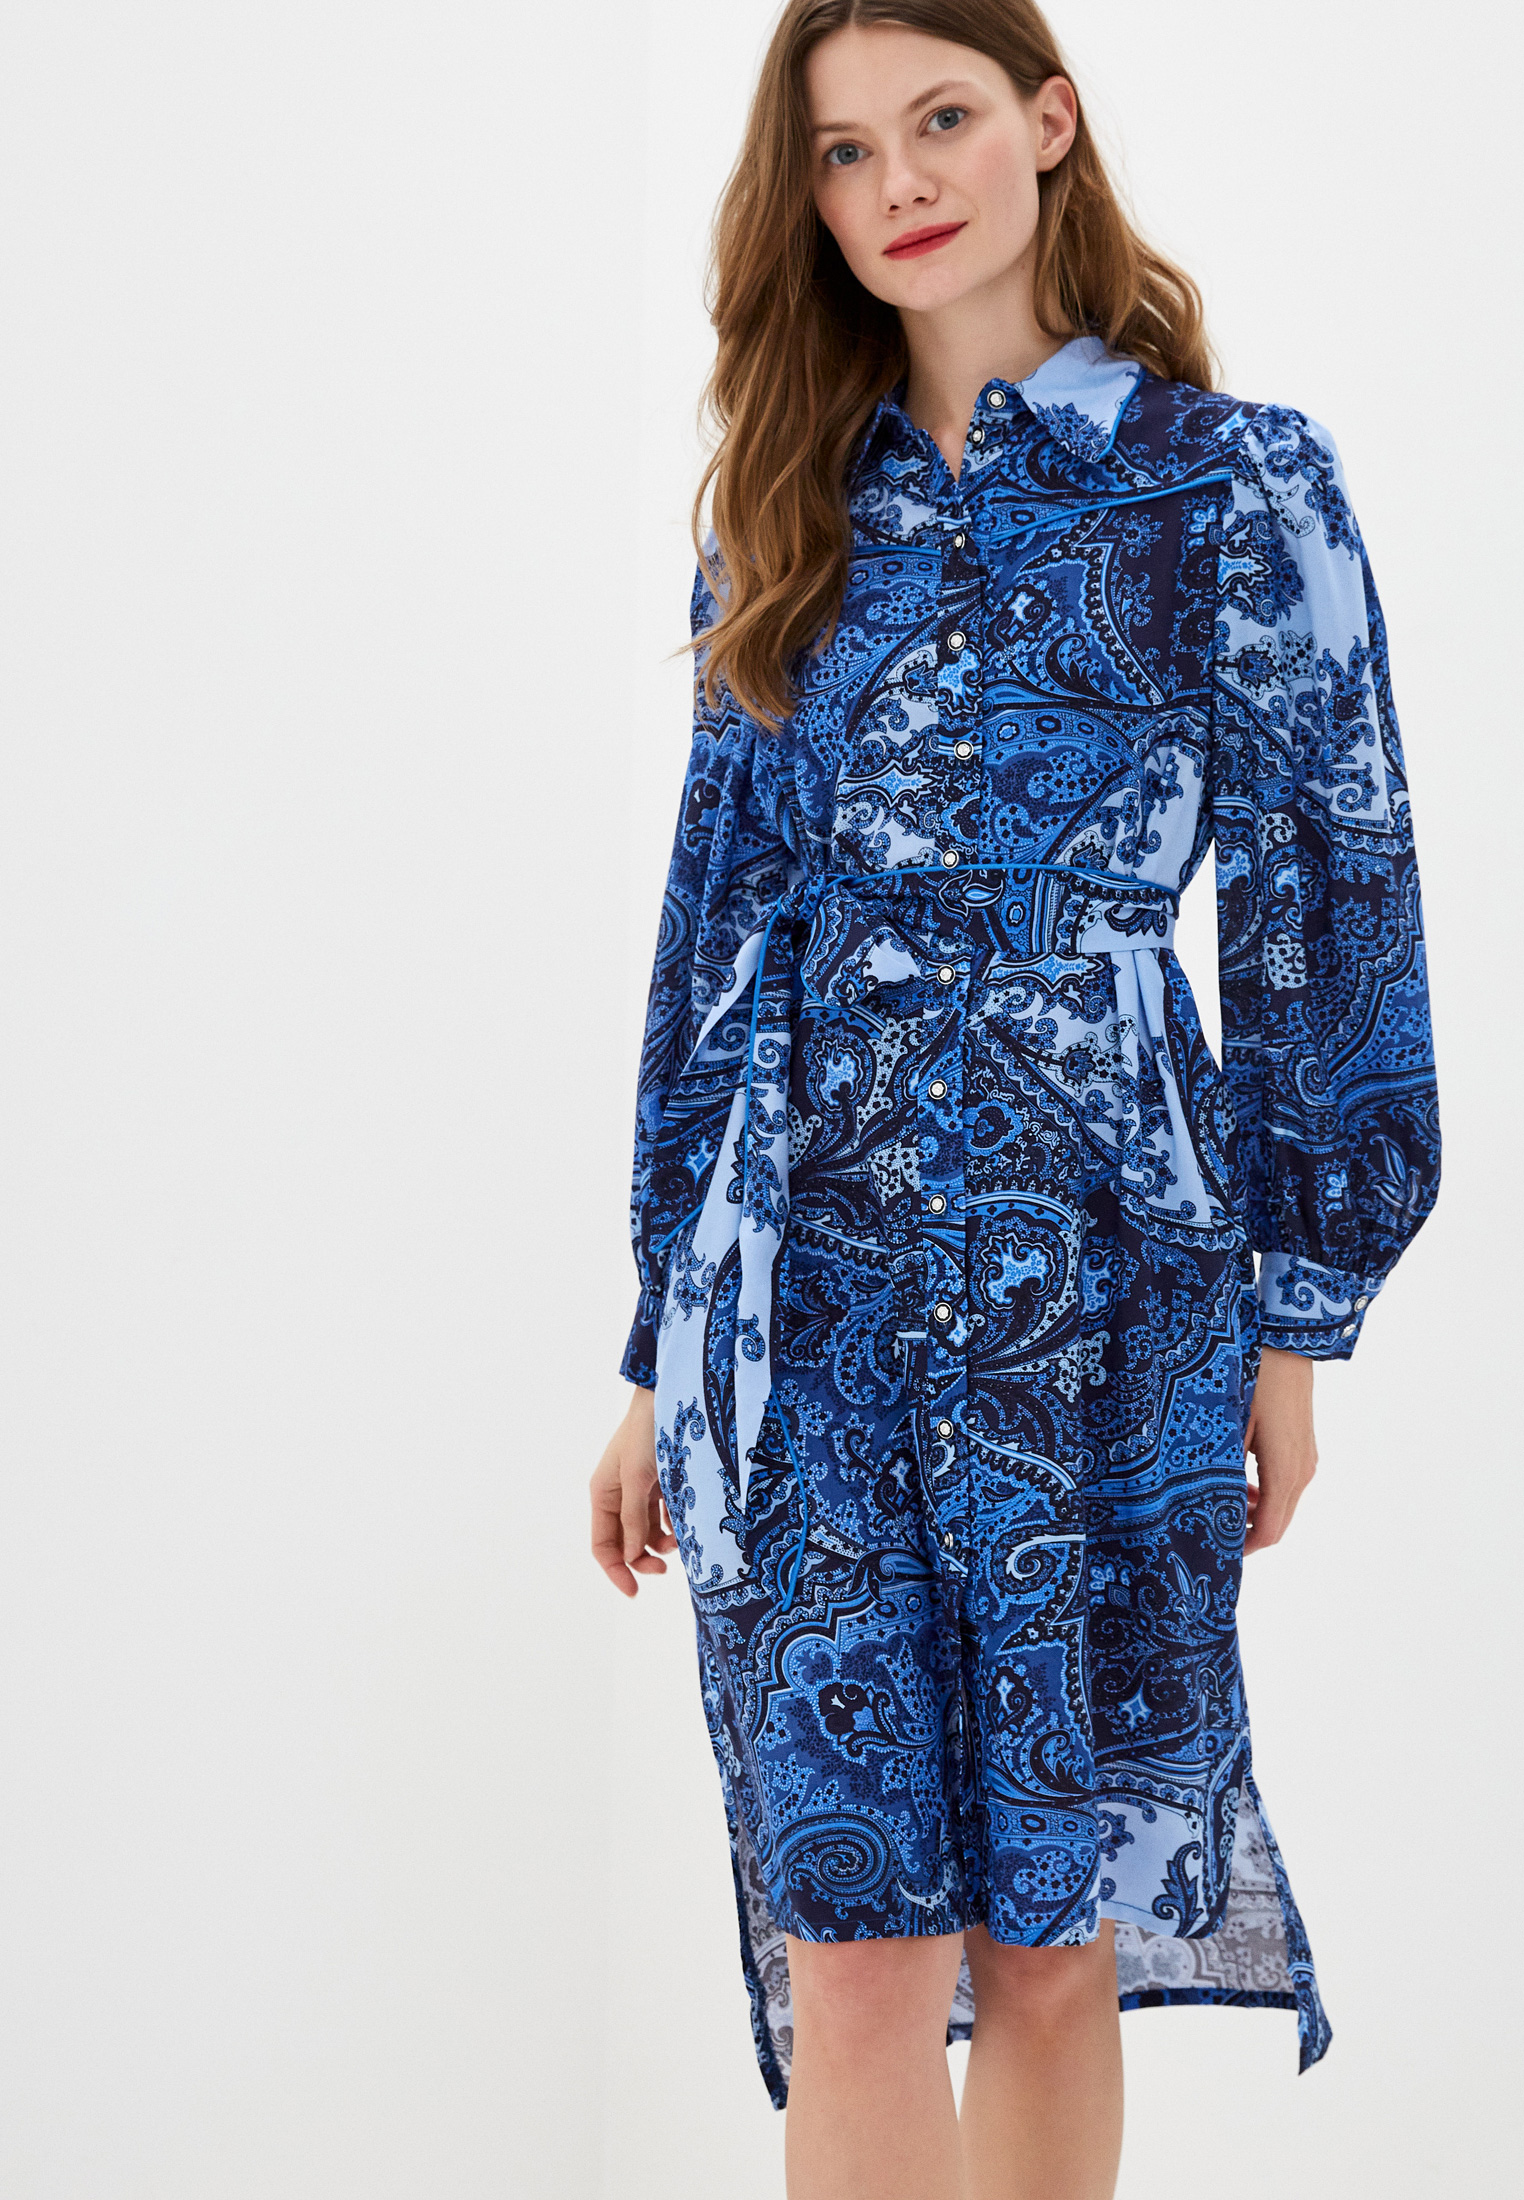 Платье Marinari, цвет: синий, MP002XW0GICG — купить в интернет-магазине Lamoda